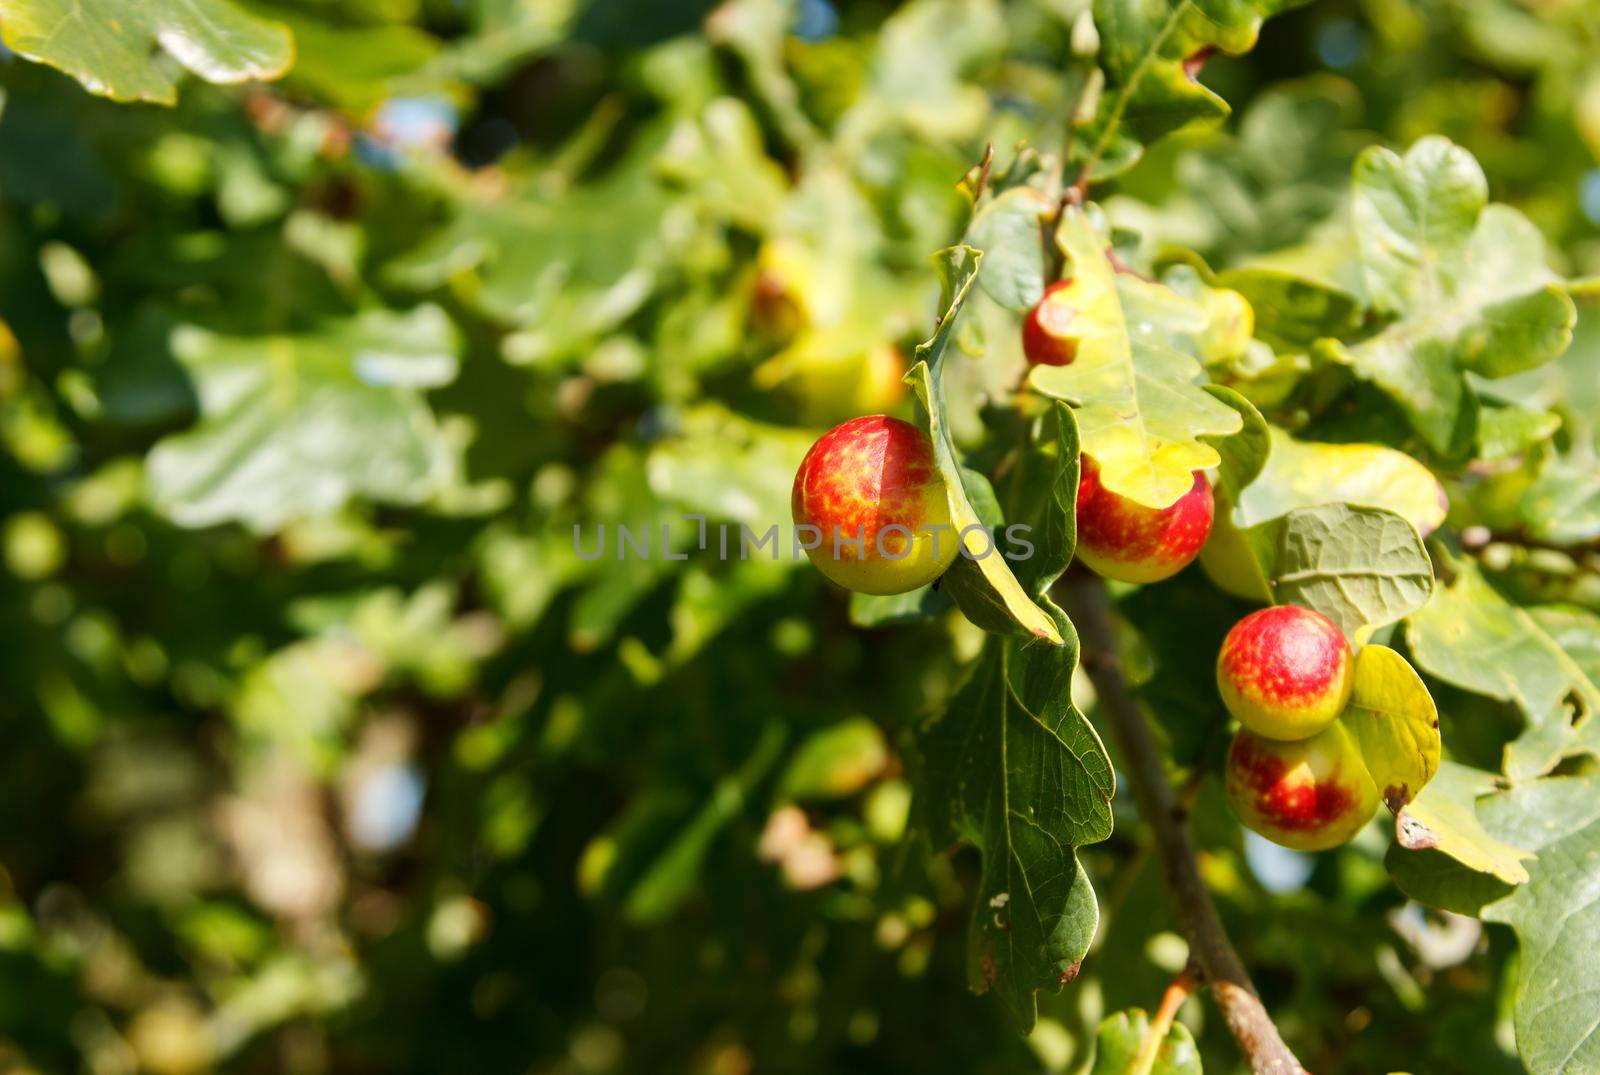 fruits of the pedunculate oak by raddnatt